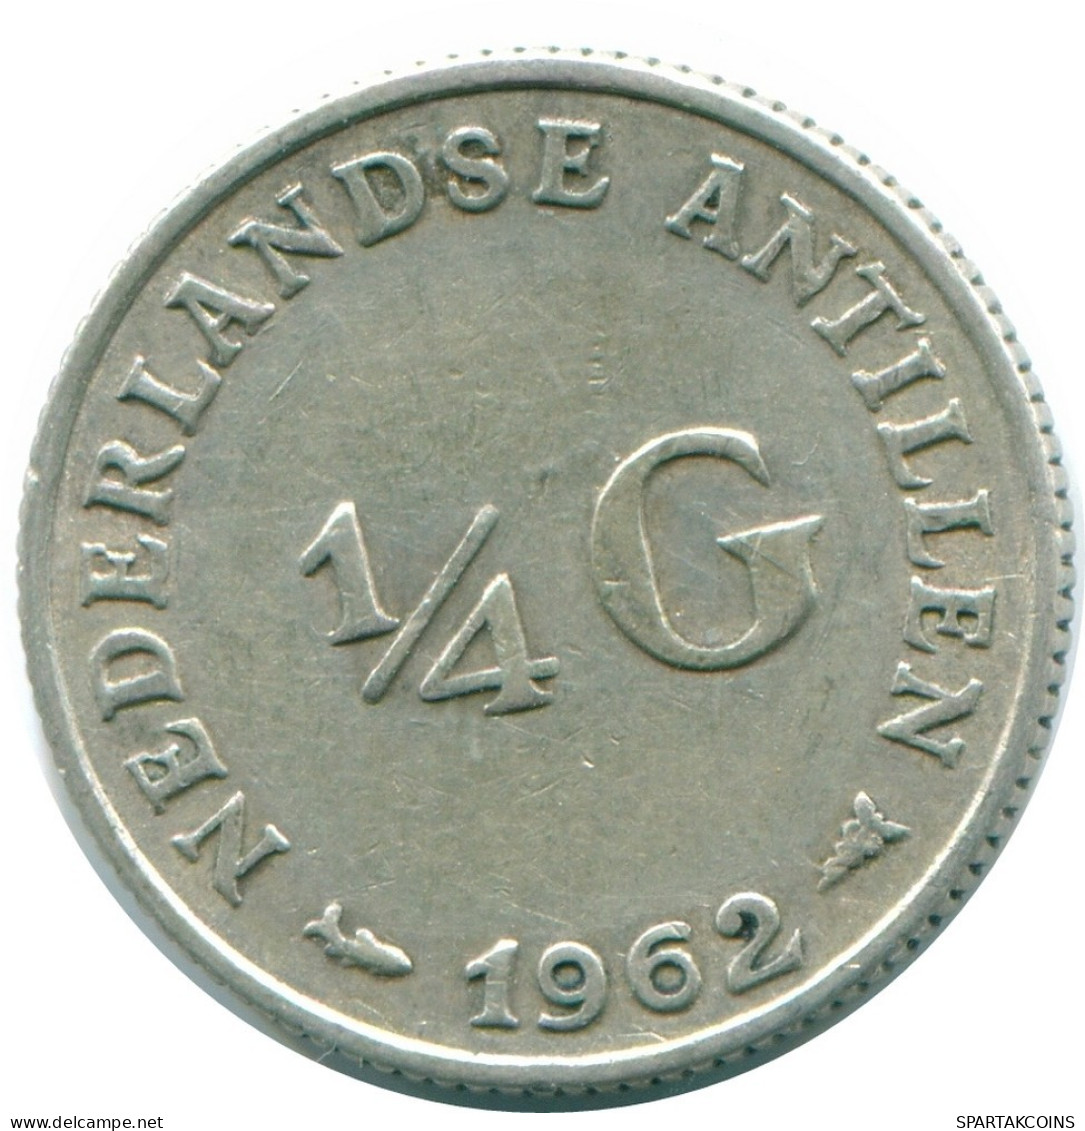 1/4 GULDEN 1962 NIEDERLÄNDISCHE ANTILLEN SILBER Koloniale Münze #NL11112.4.D.A - Netherlands Antilles